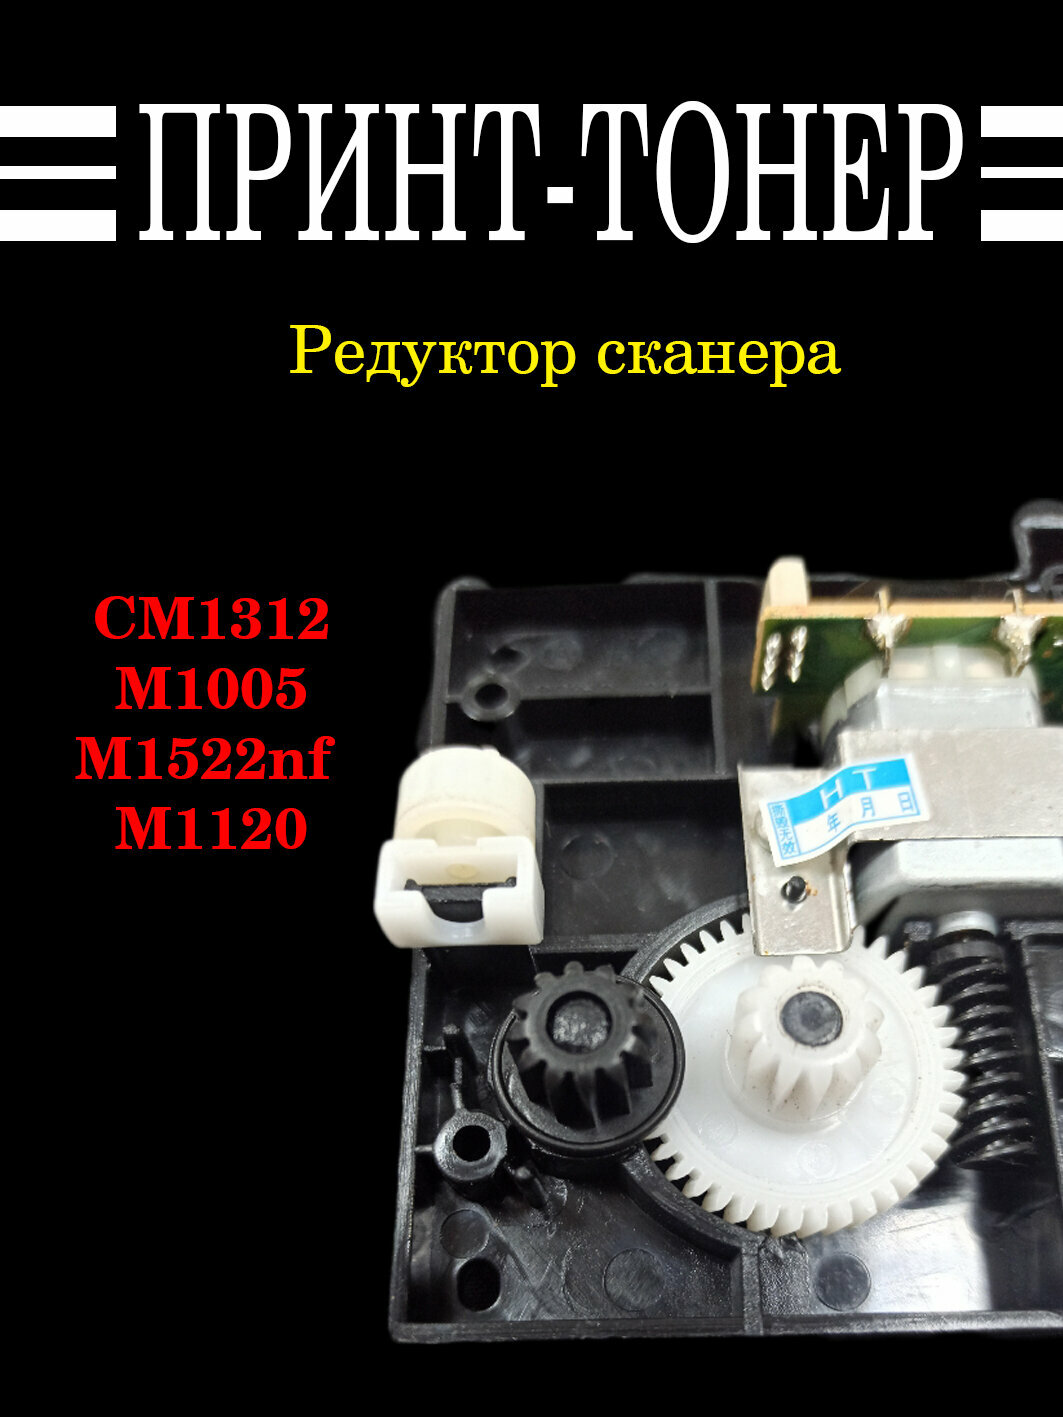 CB376-67901 Редуктор сканера HP M1005 Старая версия